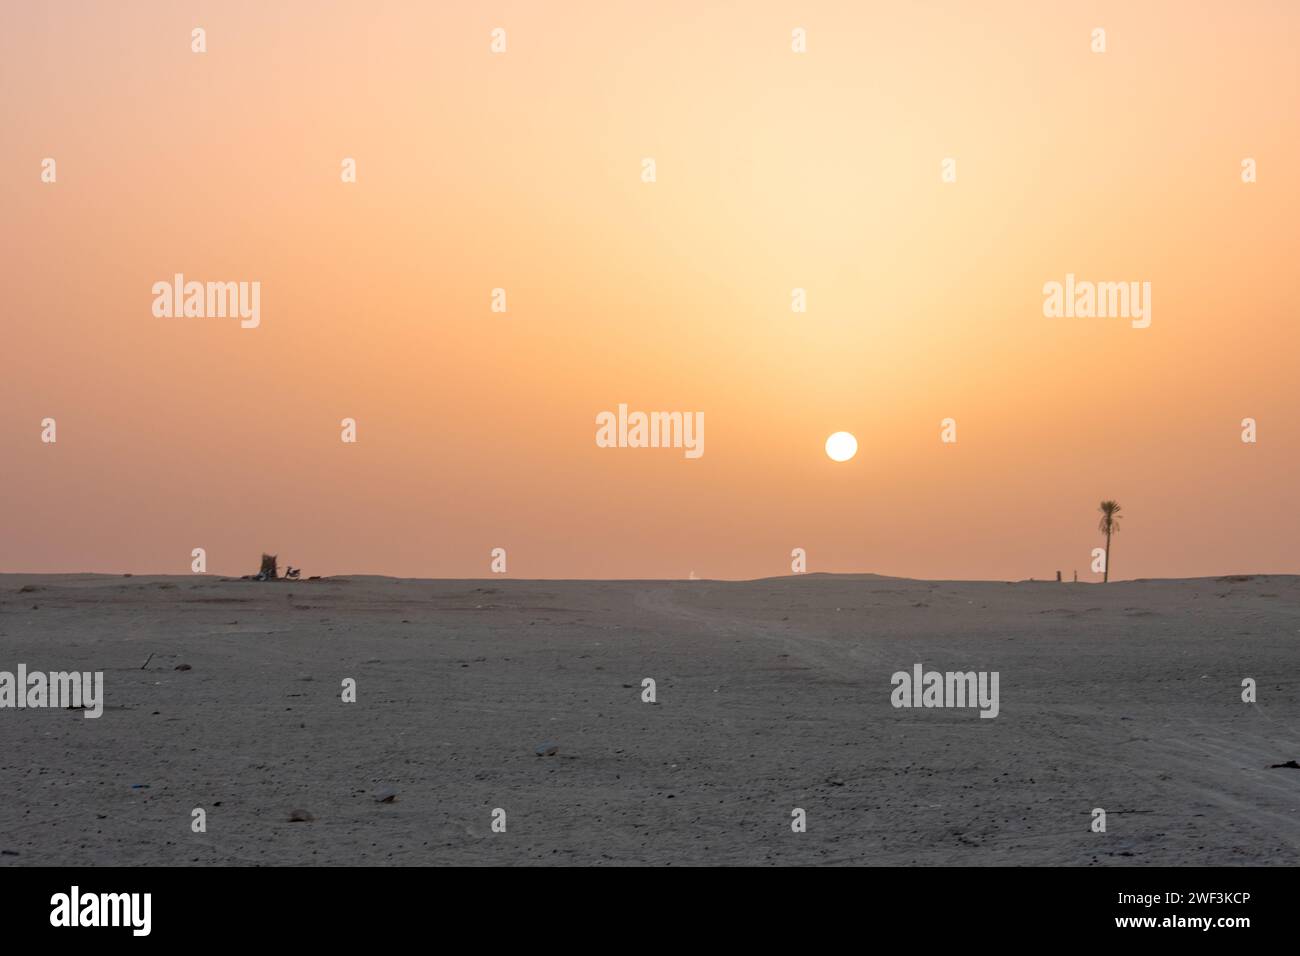 Beautiful sunset over Sahara desert in Douz, Tunisia. Sand and dunes against sky Stock Photo